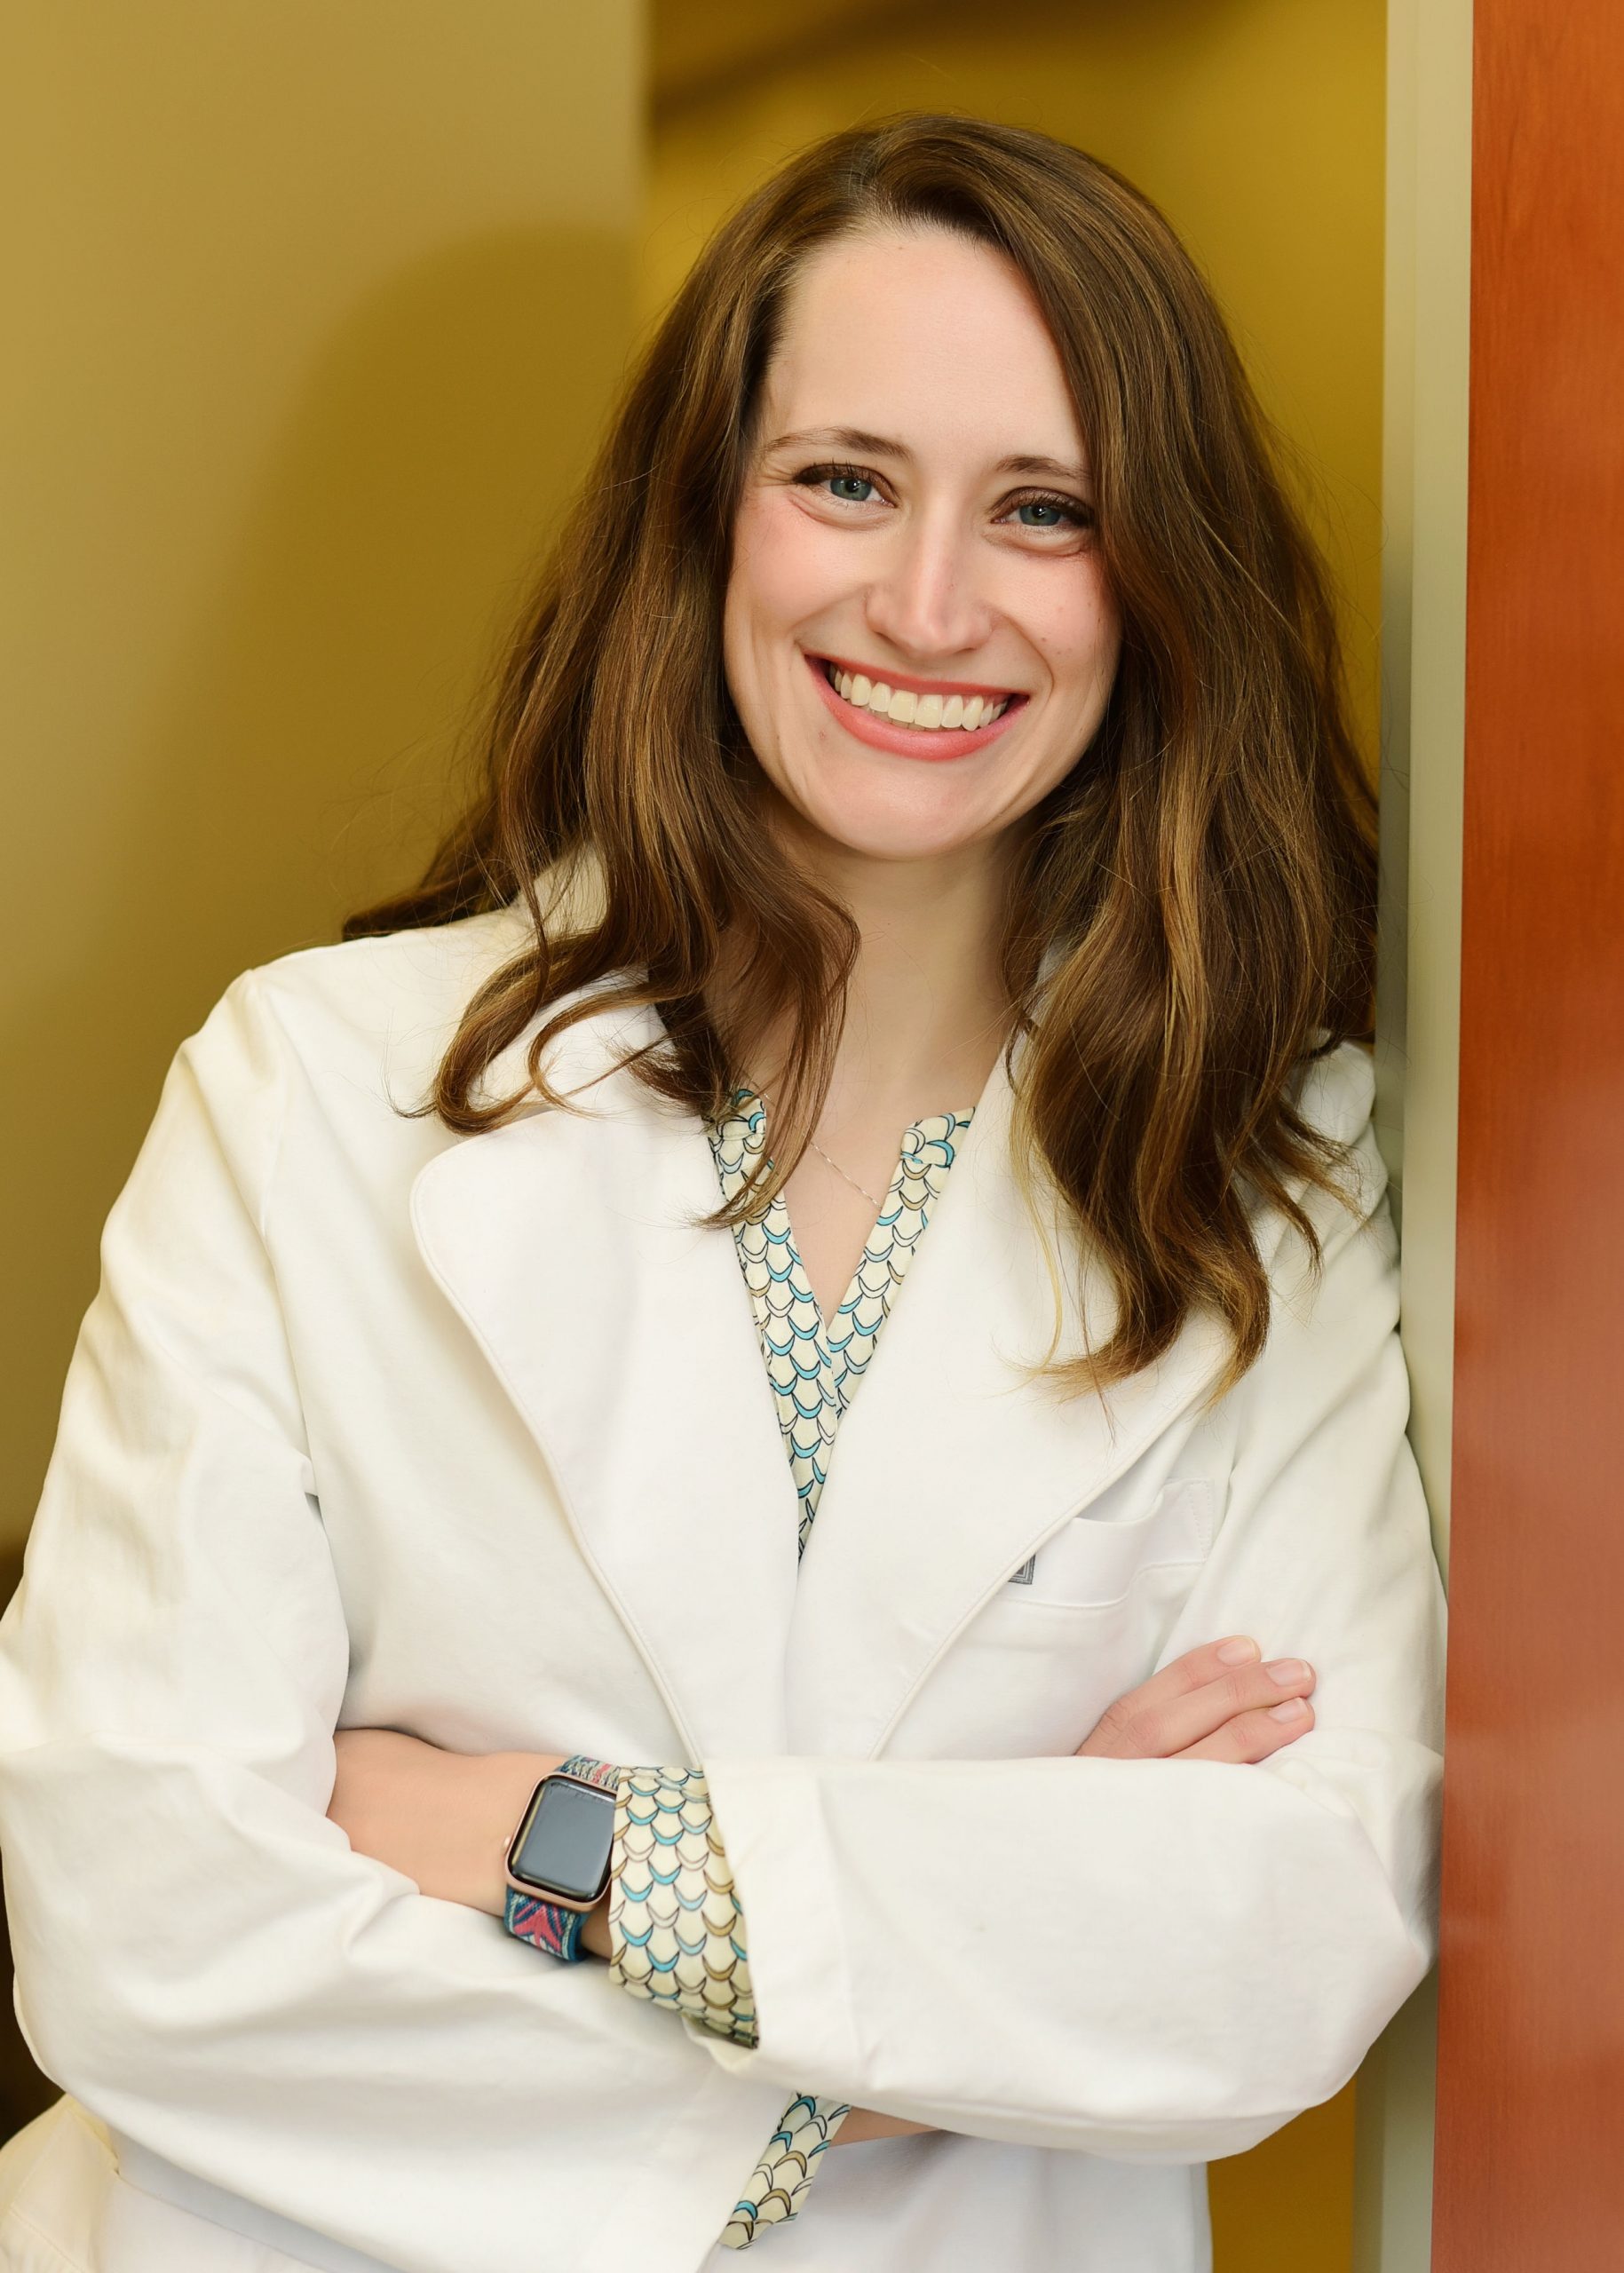 Female Gynecologist Birmingham, Alabama - Dr. Jessica Rodriguez